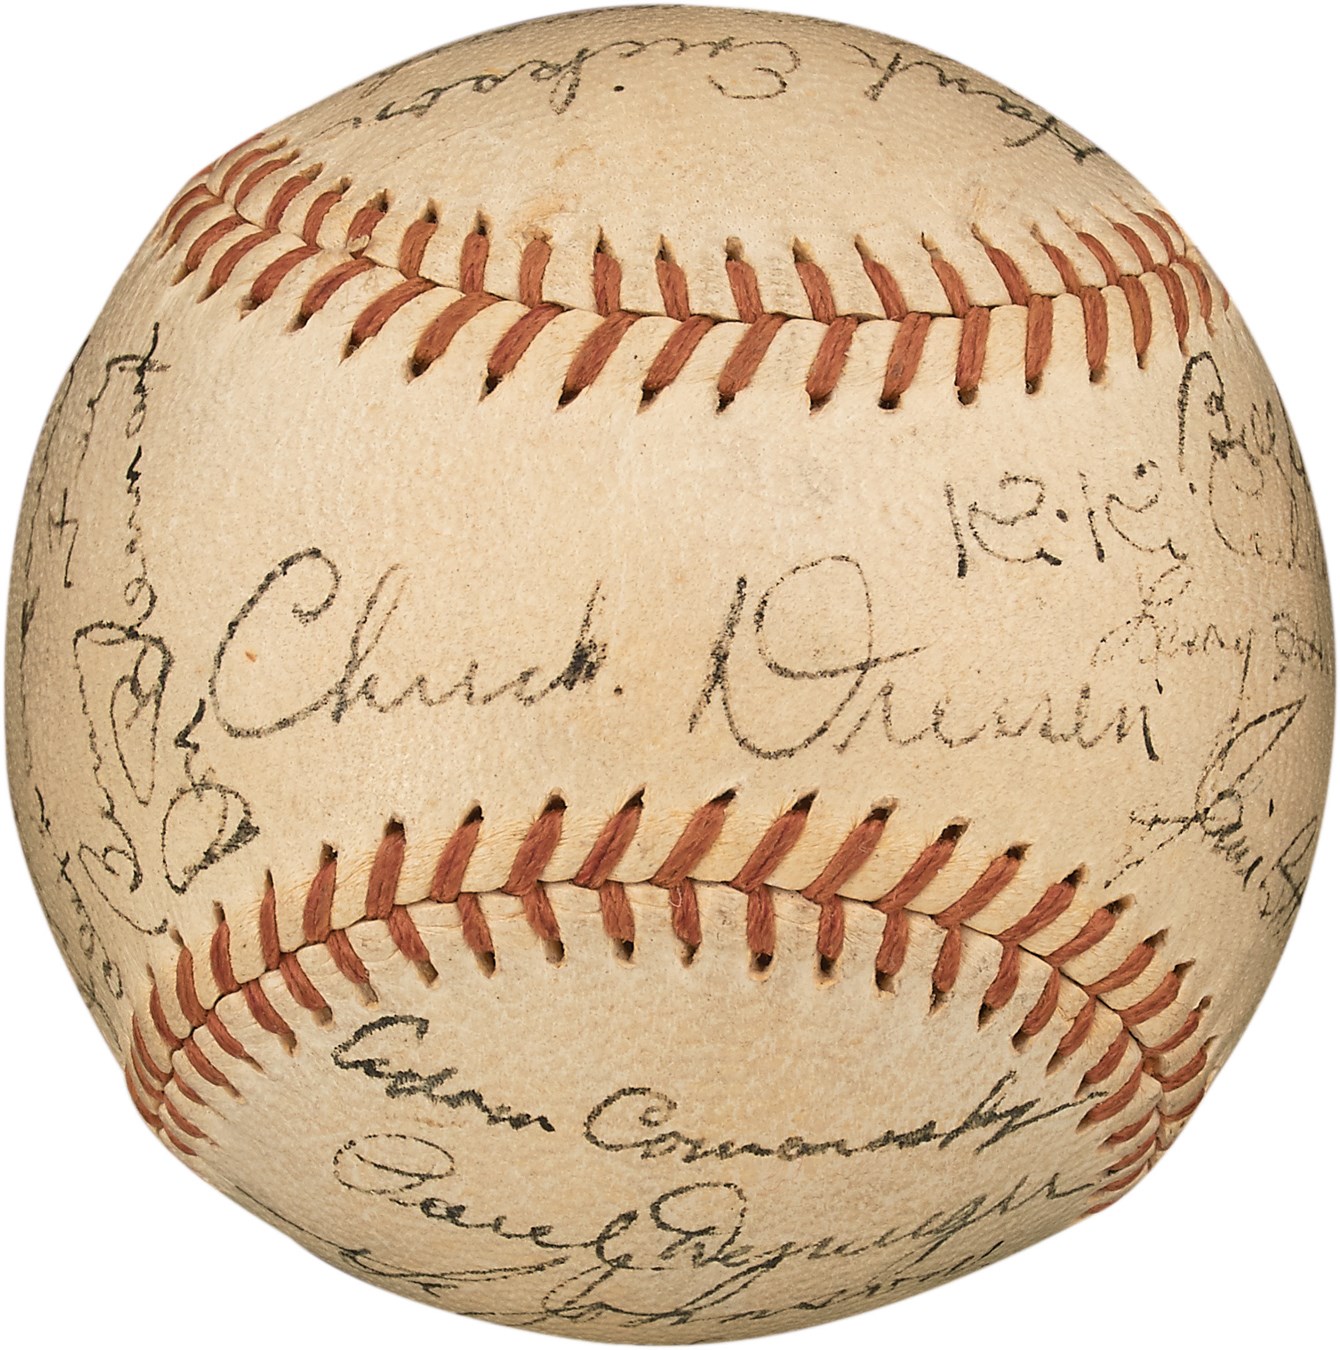 - 1935 Cincinnati Reds Team-Signed Baseball